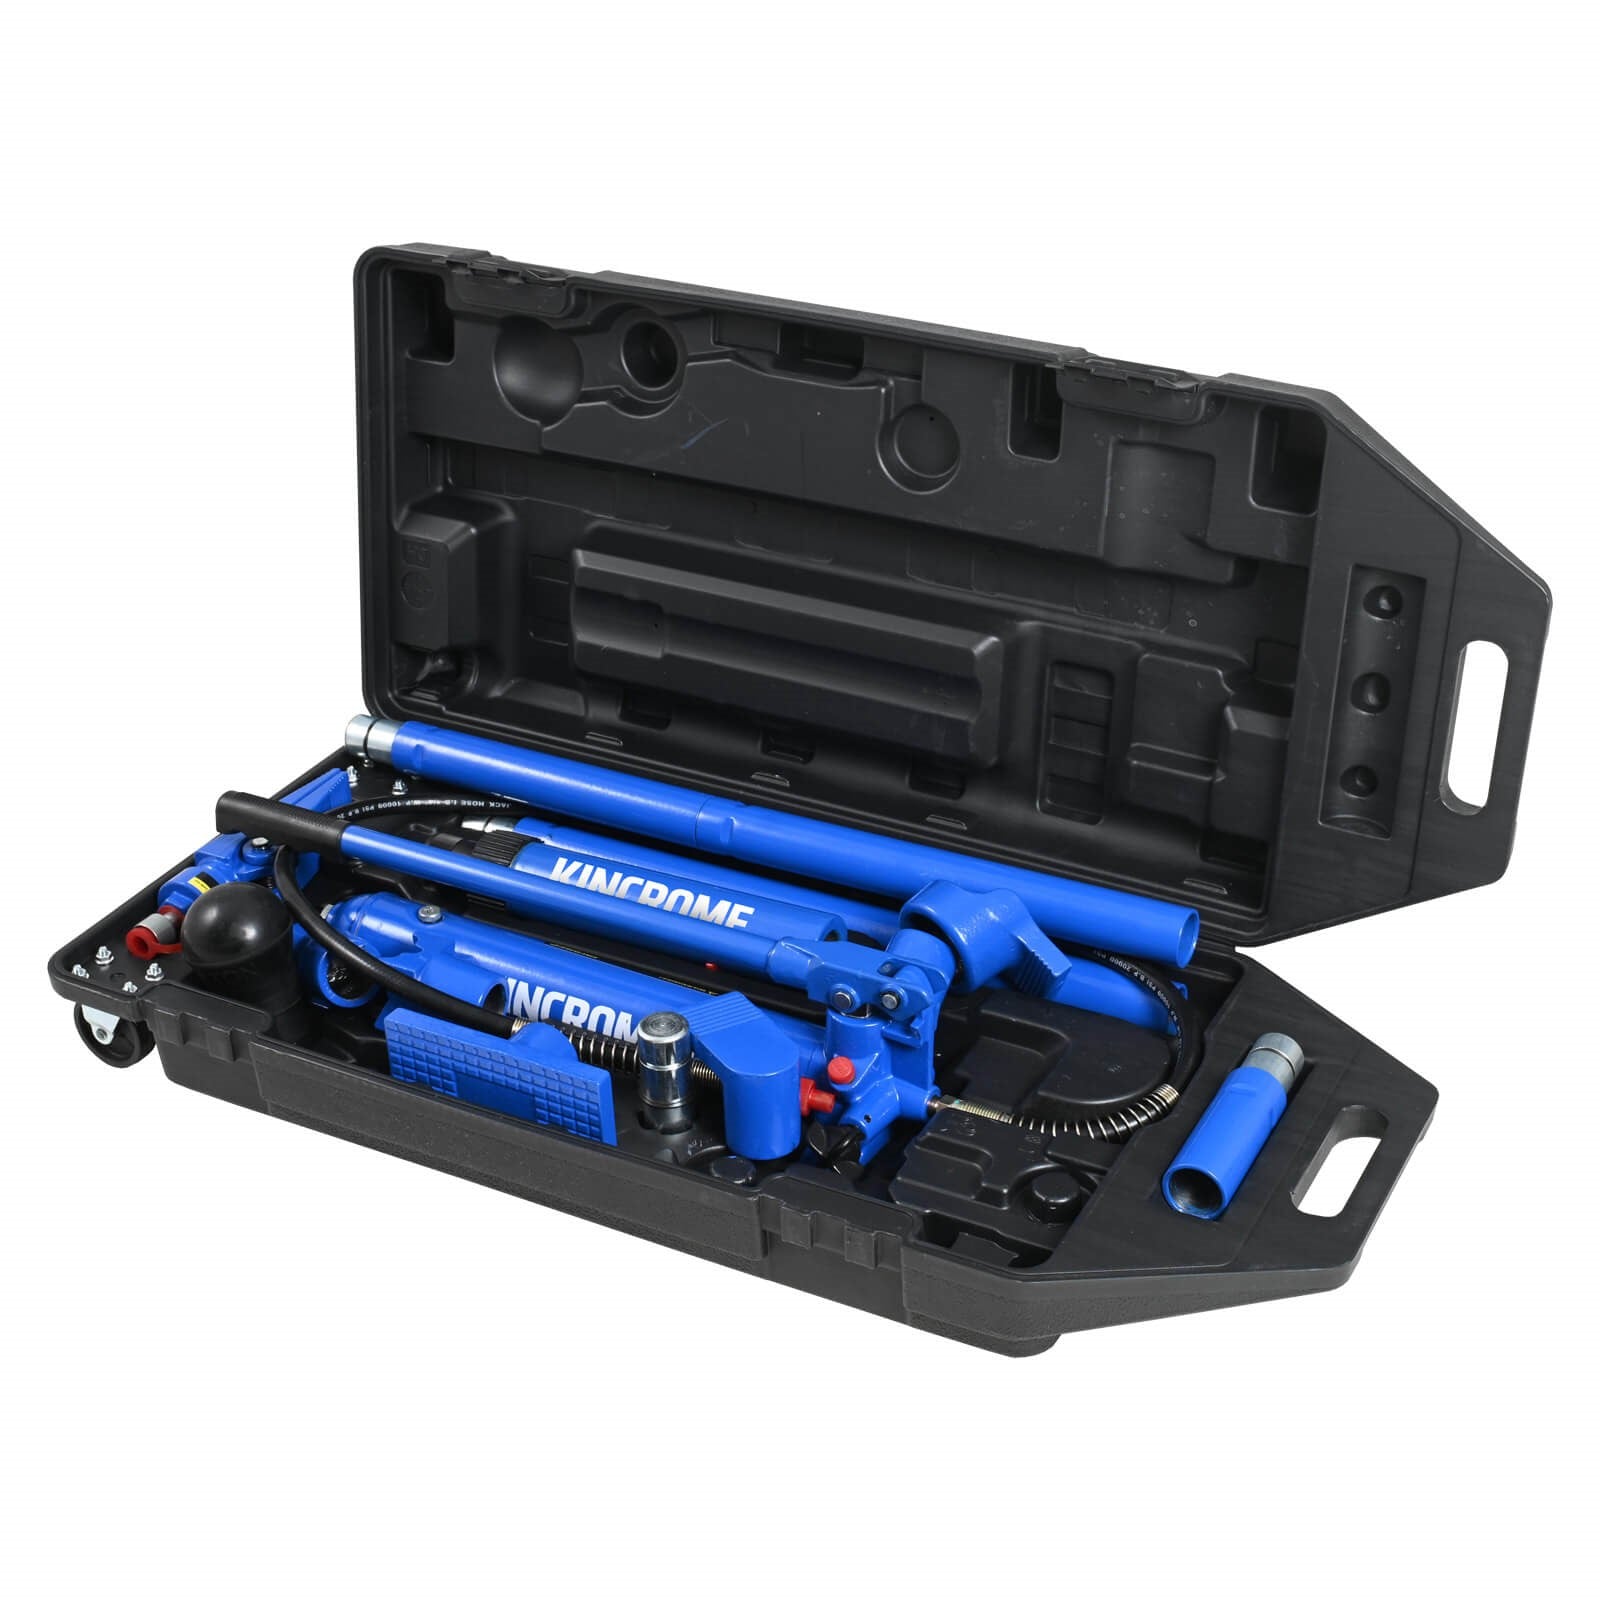 Hydraulic Body Repair Kit, 15 Piece 10 Tonne - K15147 by Kincrome